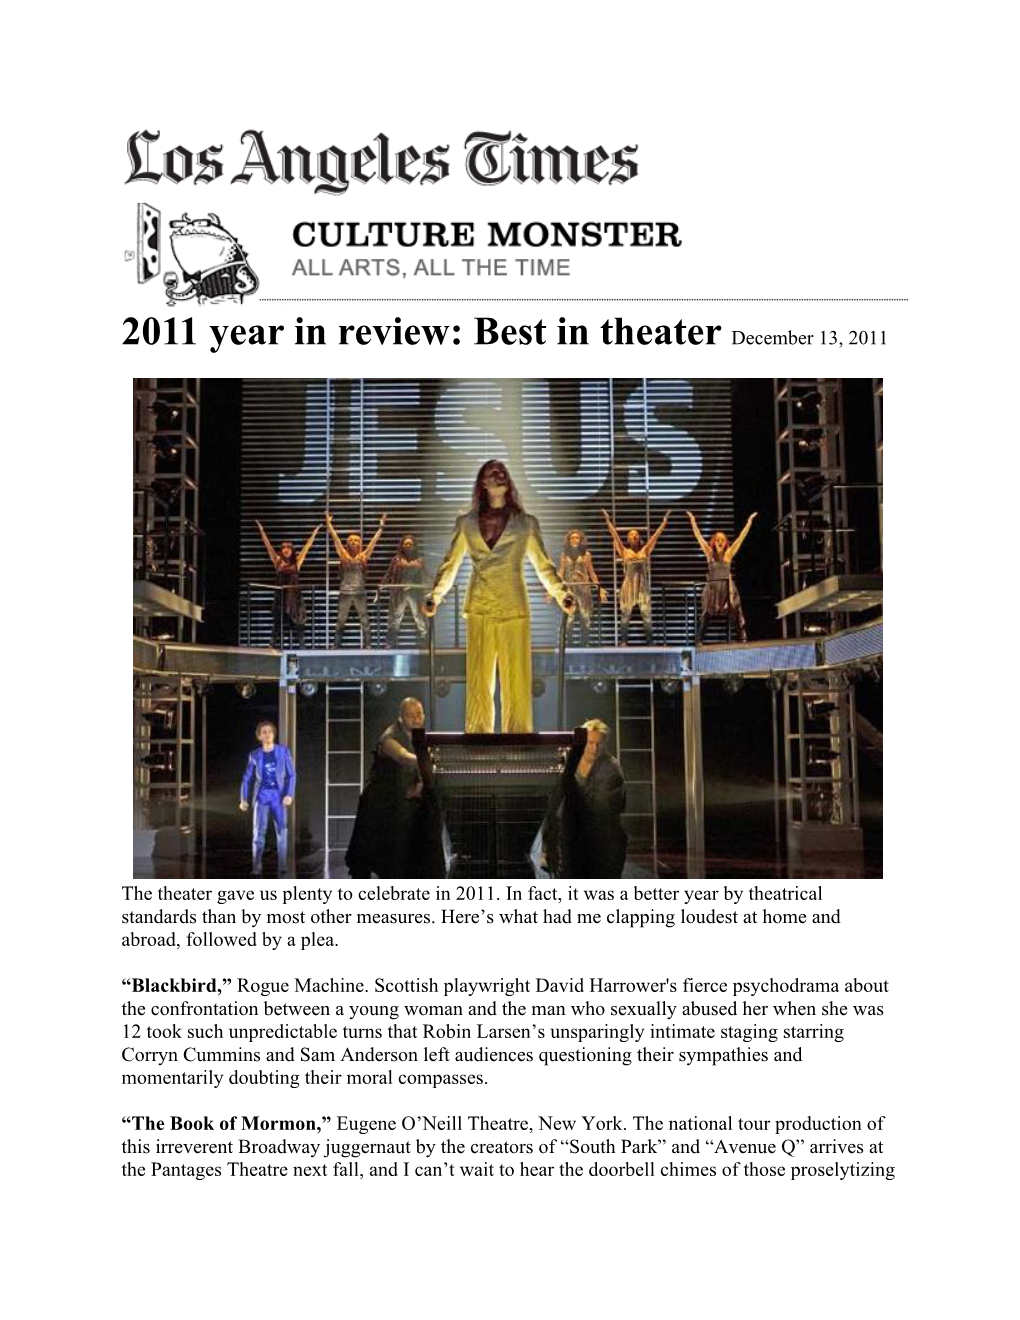 Best in Theater December 13, 2011